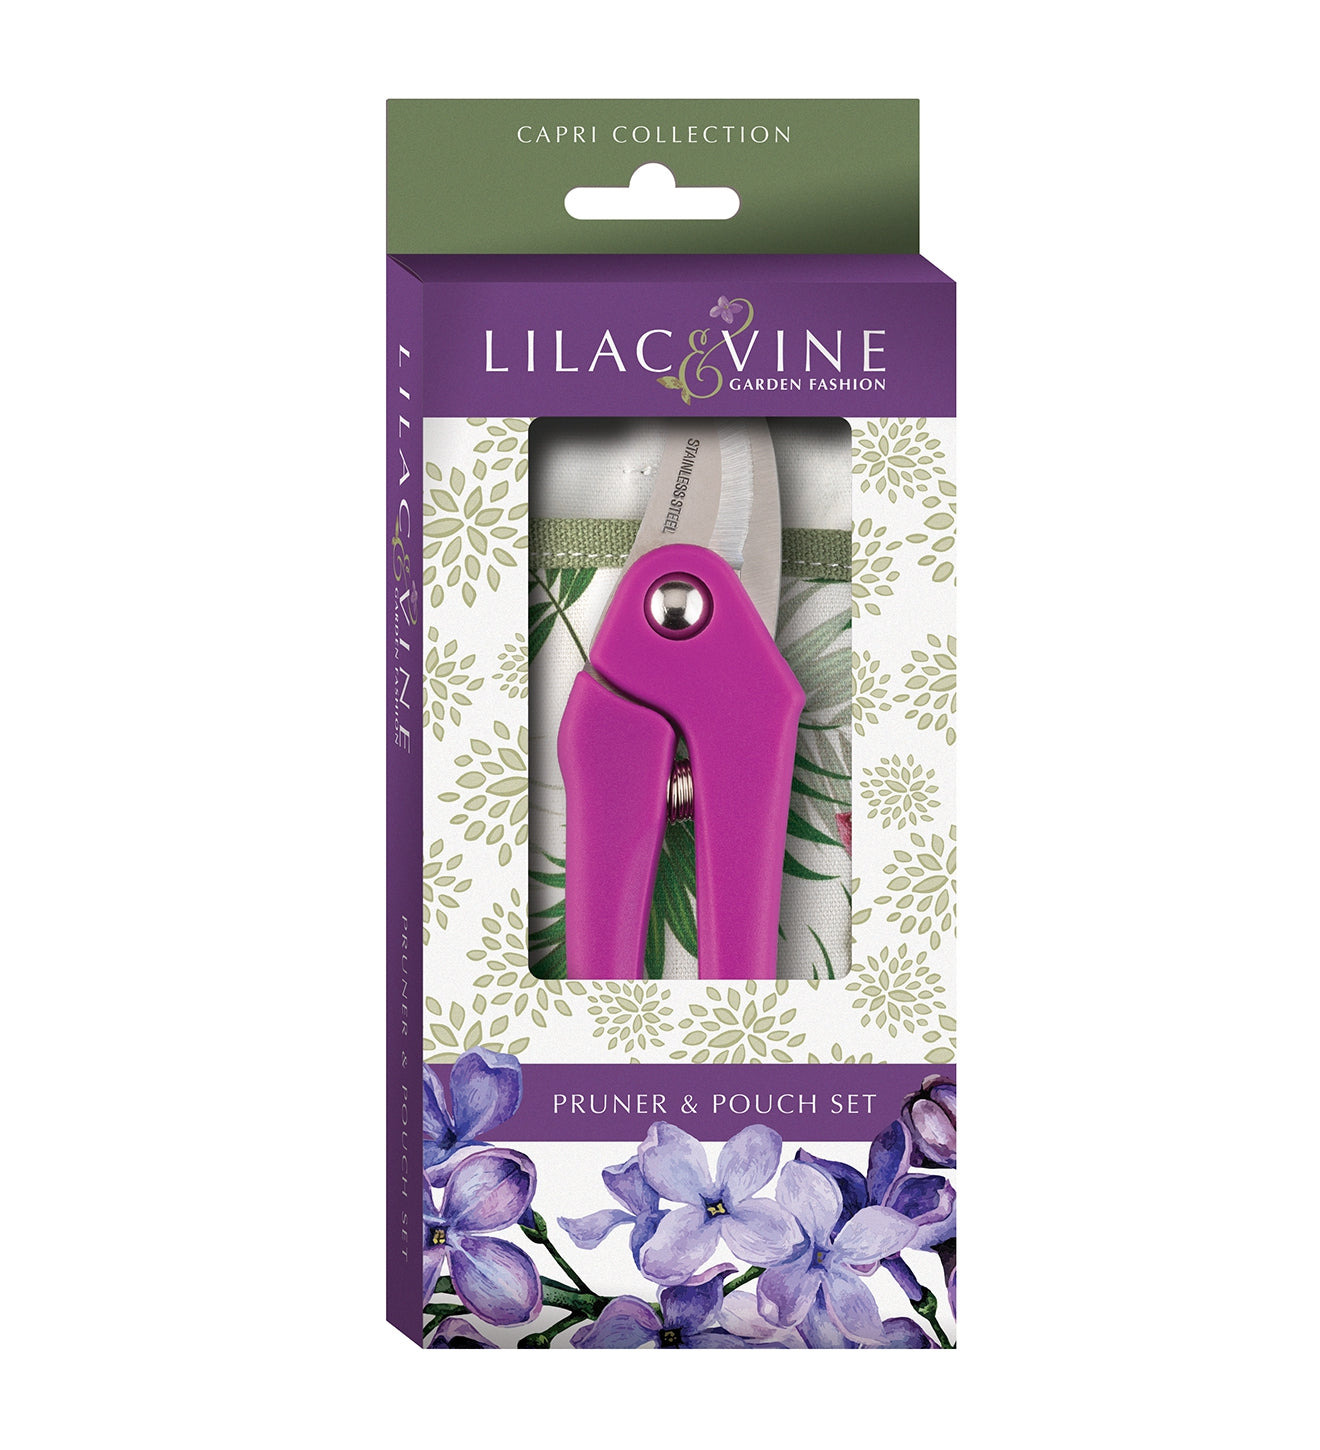 Lilac & Vine Capri Pruner & Pouch Set Outdoor Garden Plant Hand Tool